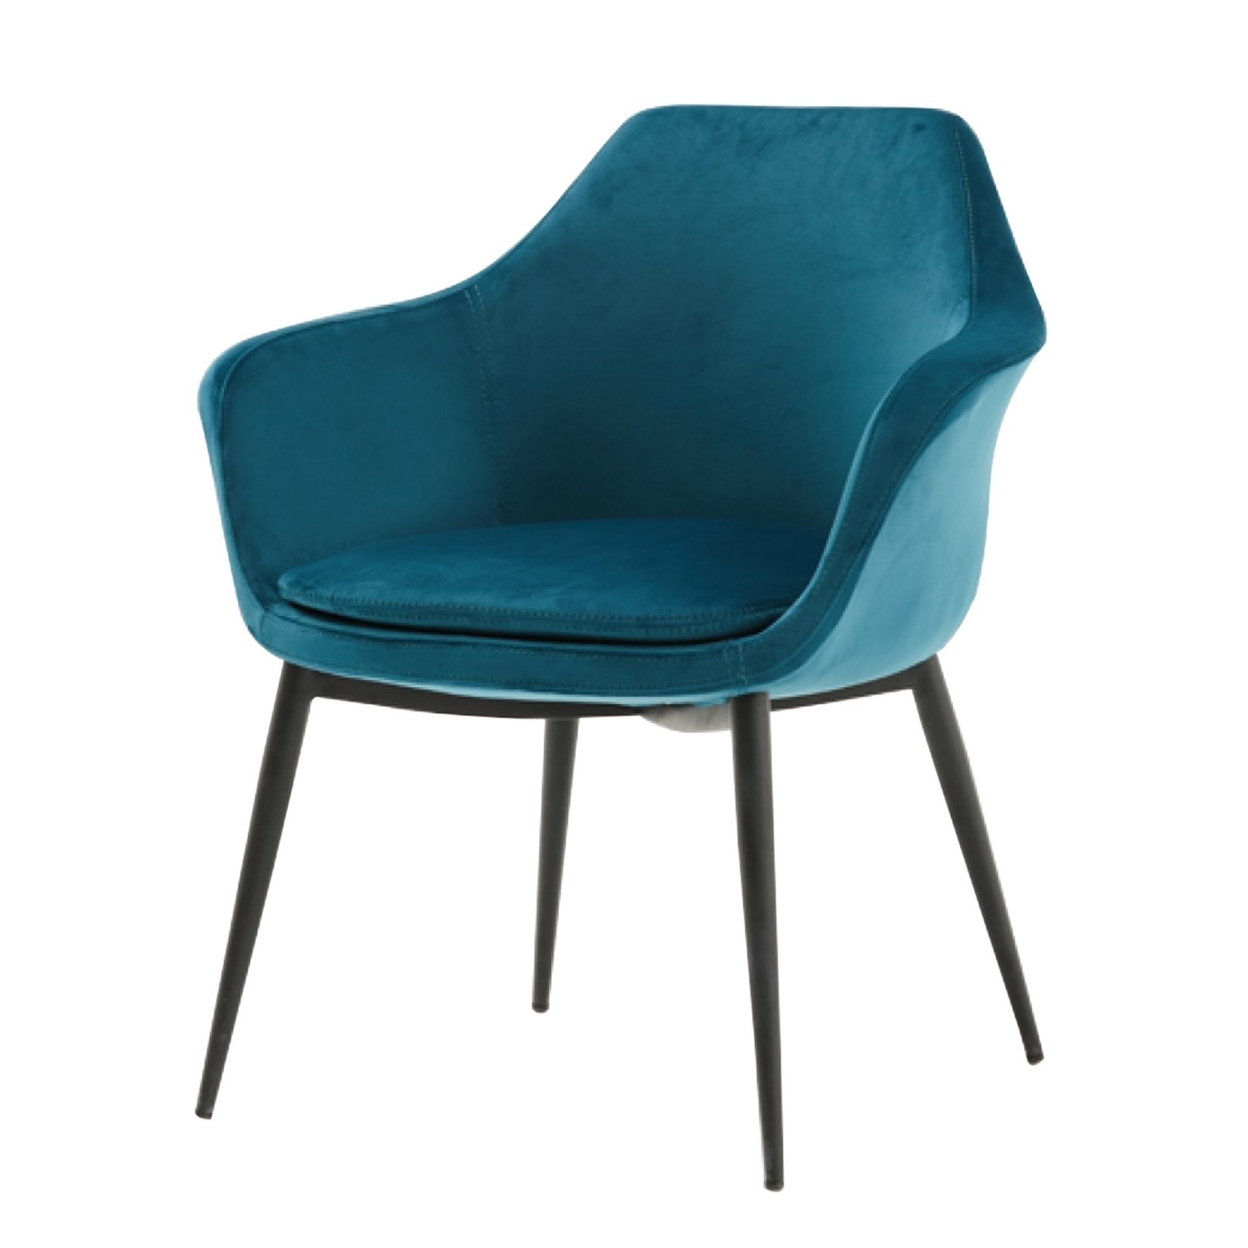 Velvet Upholstered Dining Chair With Padded Seat And Tapered Legs, Blue- Saltoro Sherpi